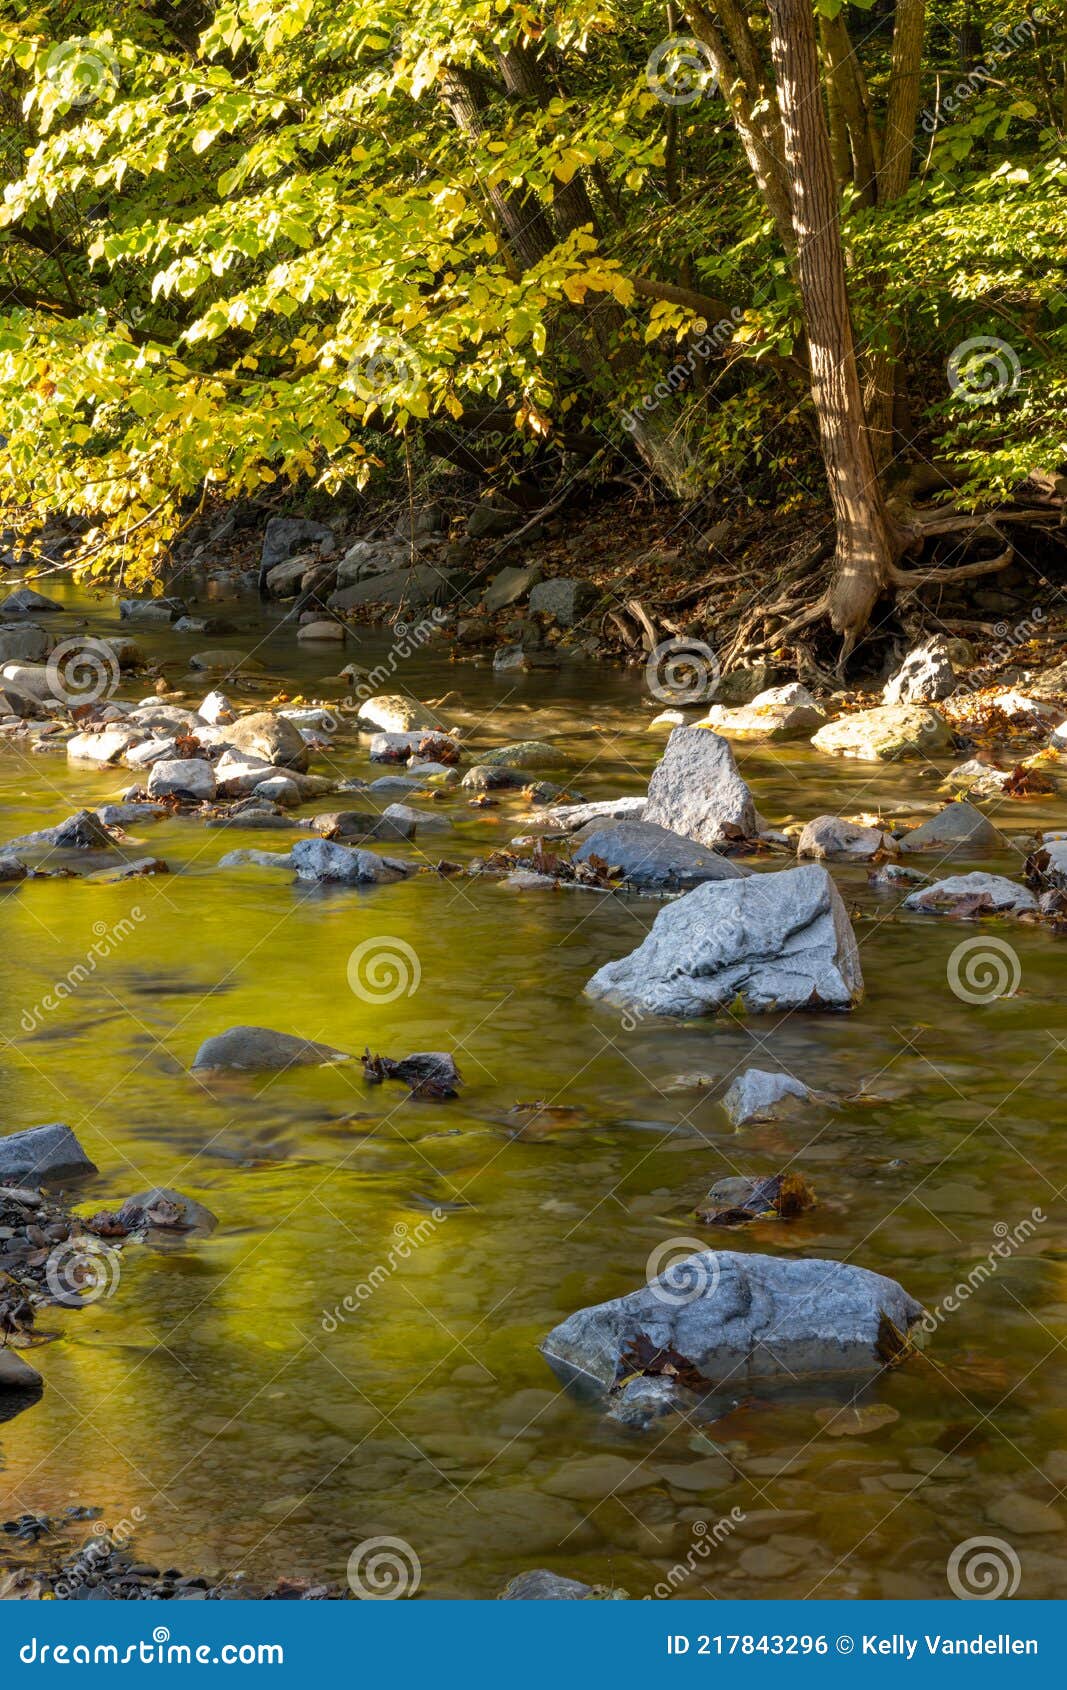 green leaves reflect in rocky creek